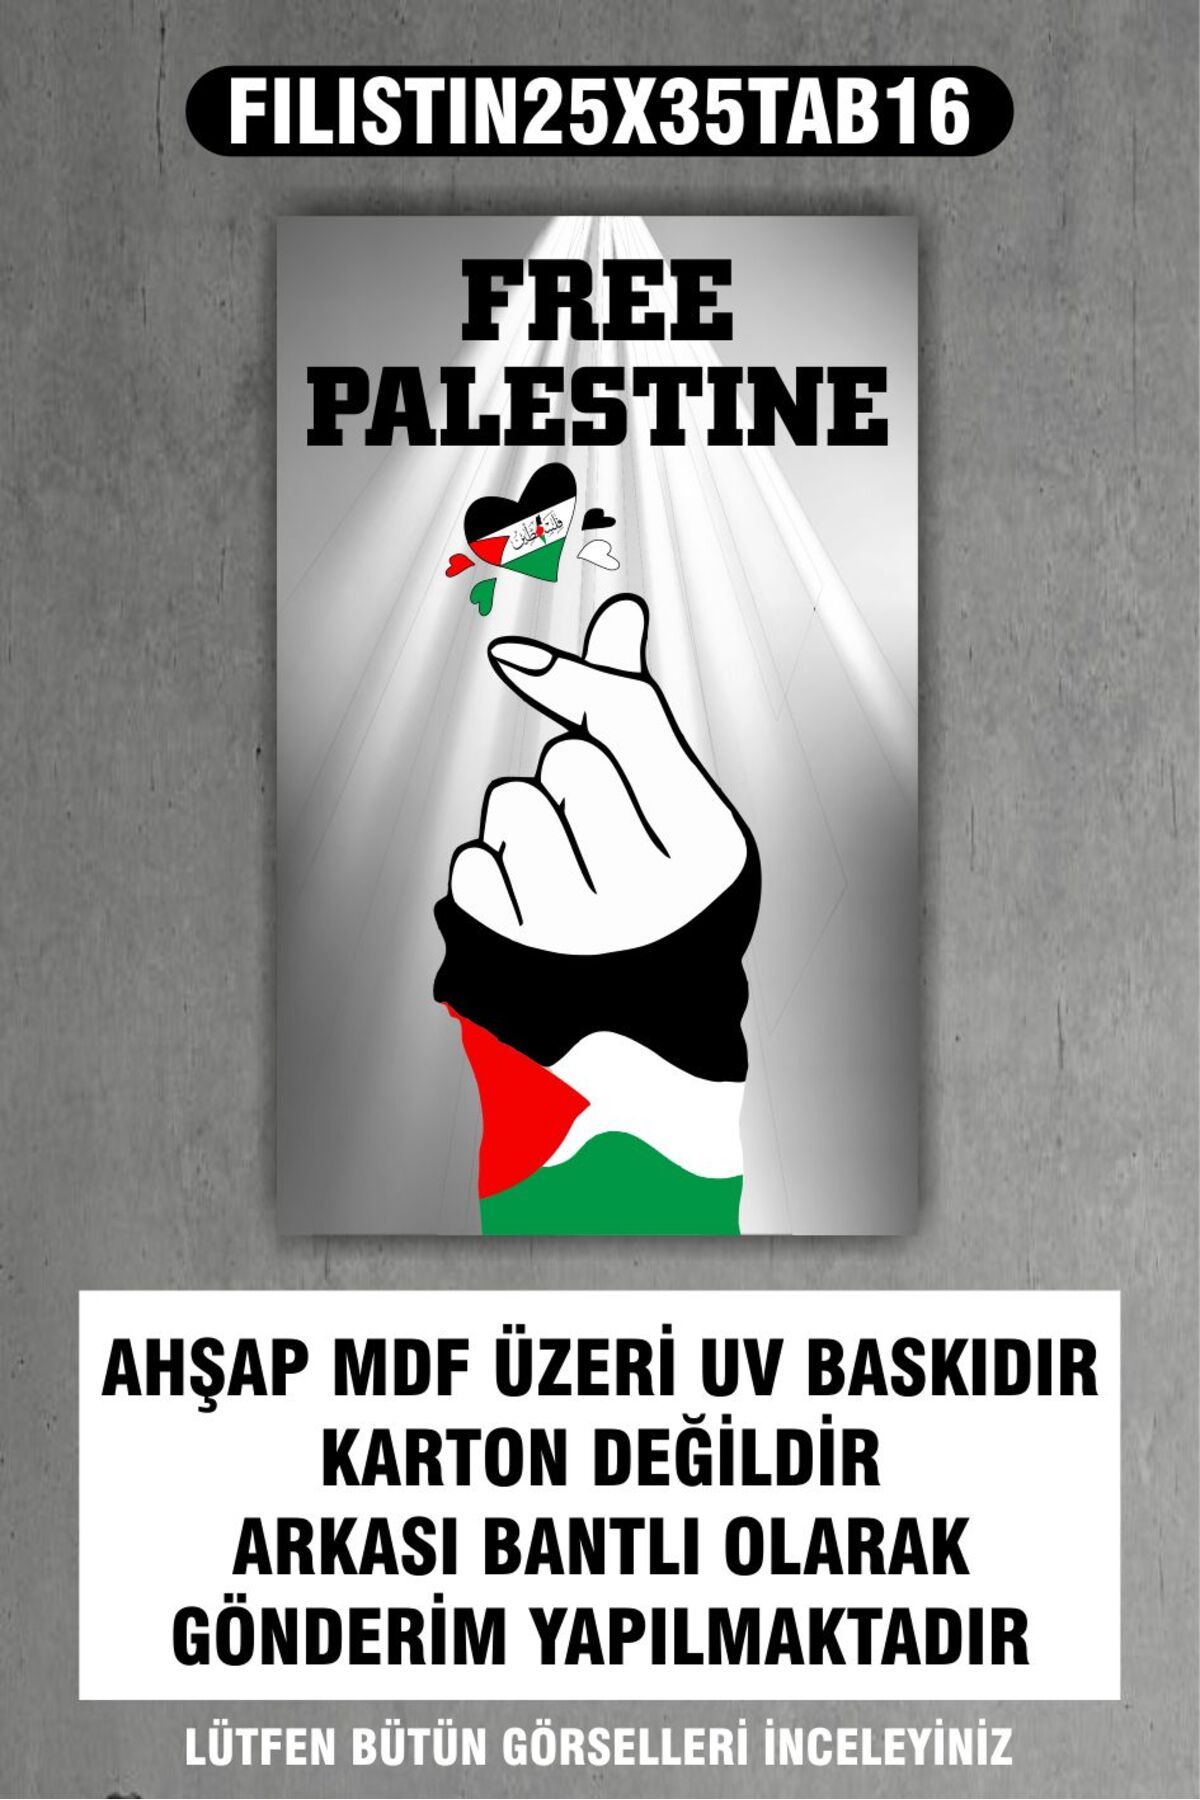 OneMina 1 Parça (25x35) Büyük Boy Filistin Kalp Selamı Free Palestine Tablo Poster - FILISTIN25X35-016